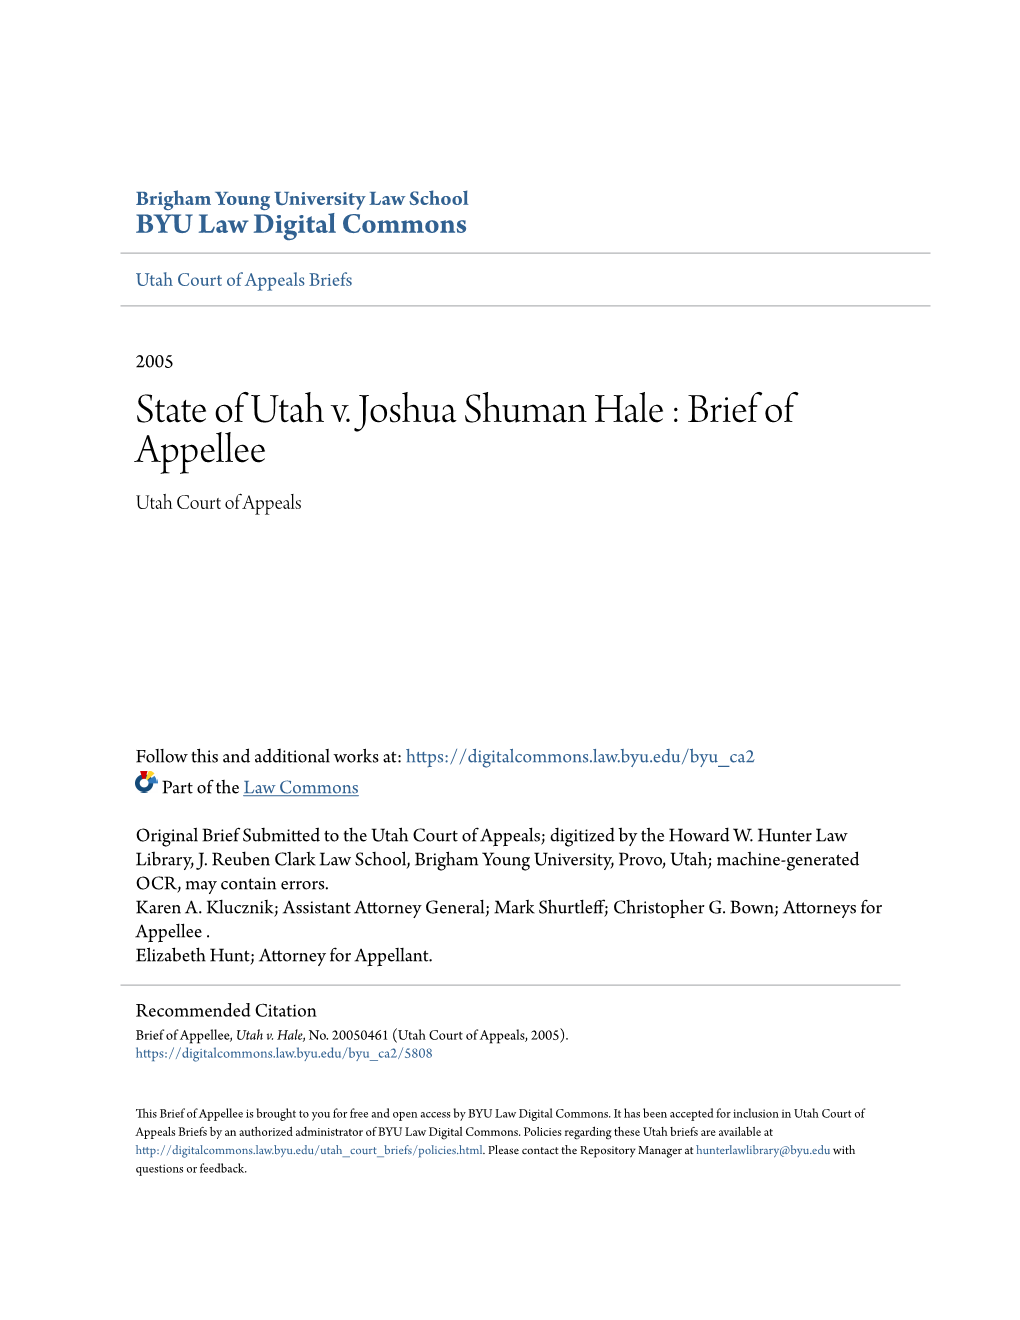 State of Utah V. Joshua Shuman Hale : Brief of Appellee Utah Court of Appeals